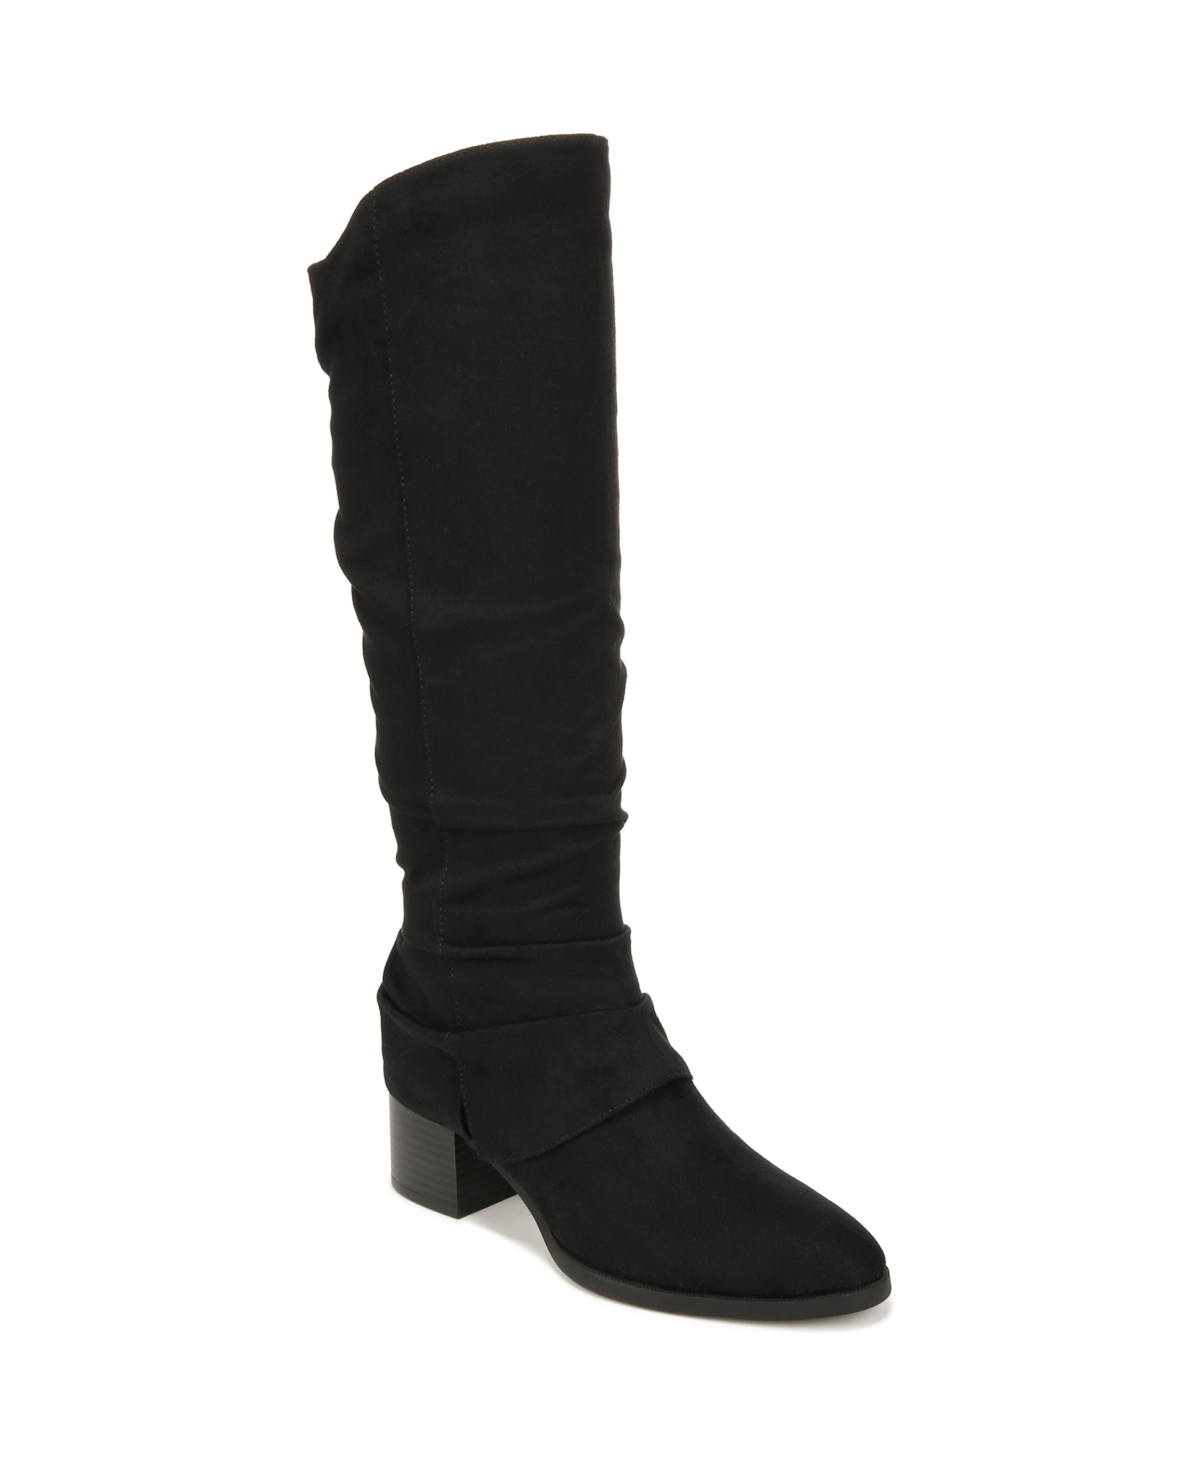 Delilah Wide Calf Knee High Boots - Black Microsuede